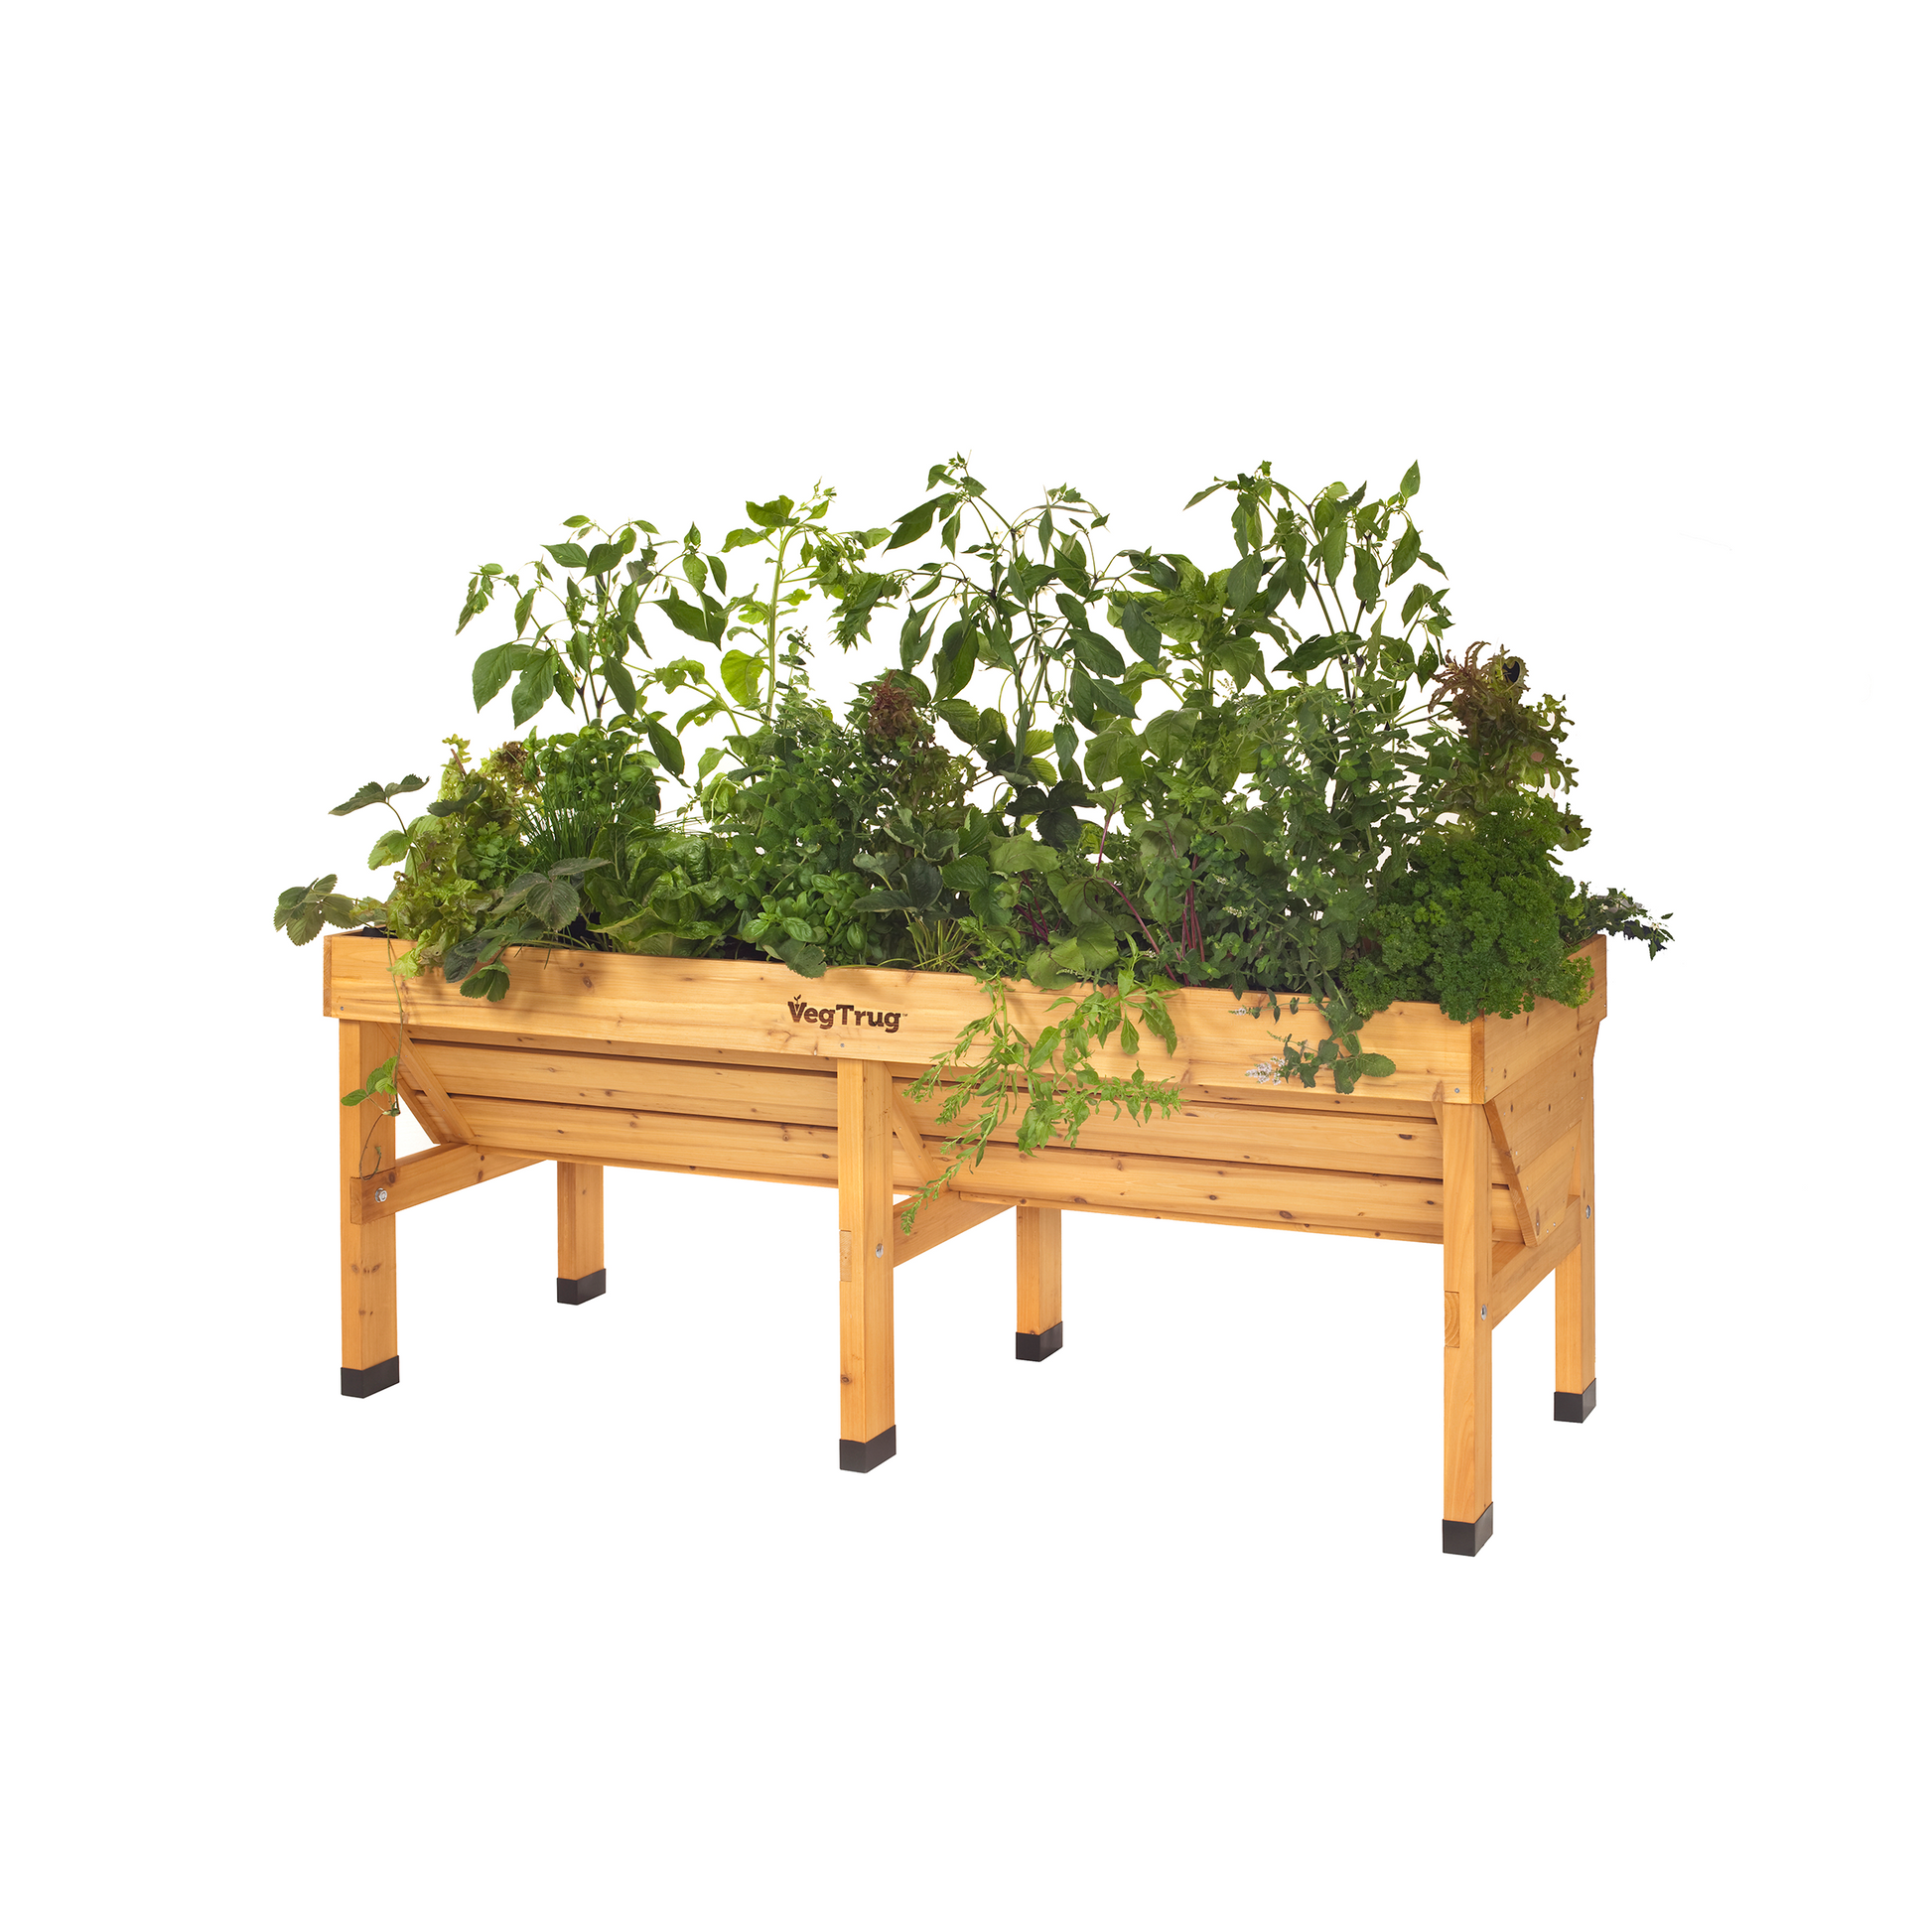 Woven Wood Medium Square Planter Basket - Hudson Grace